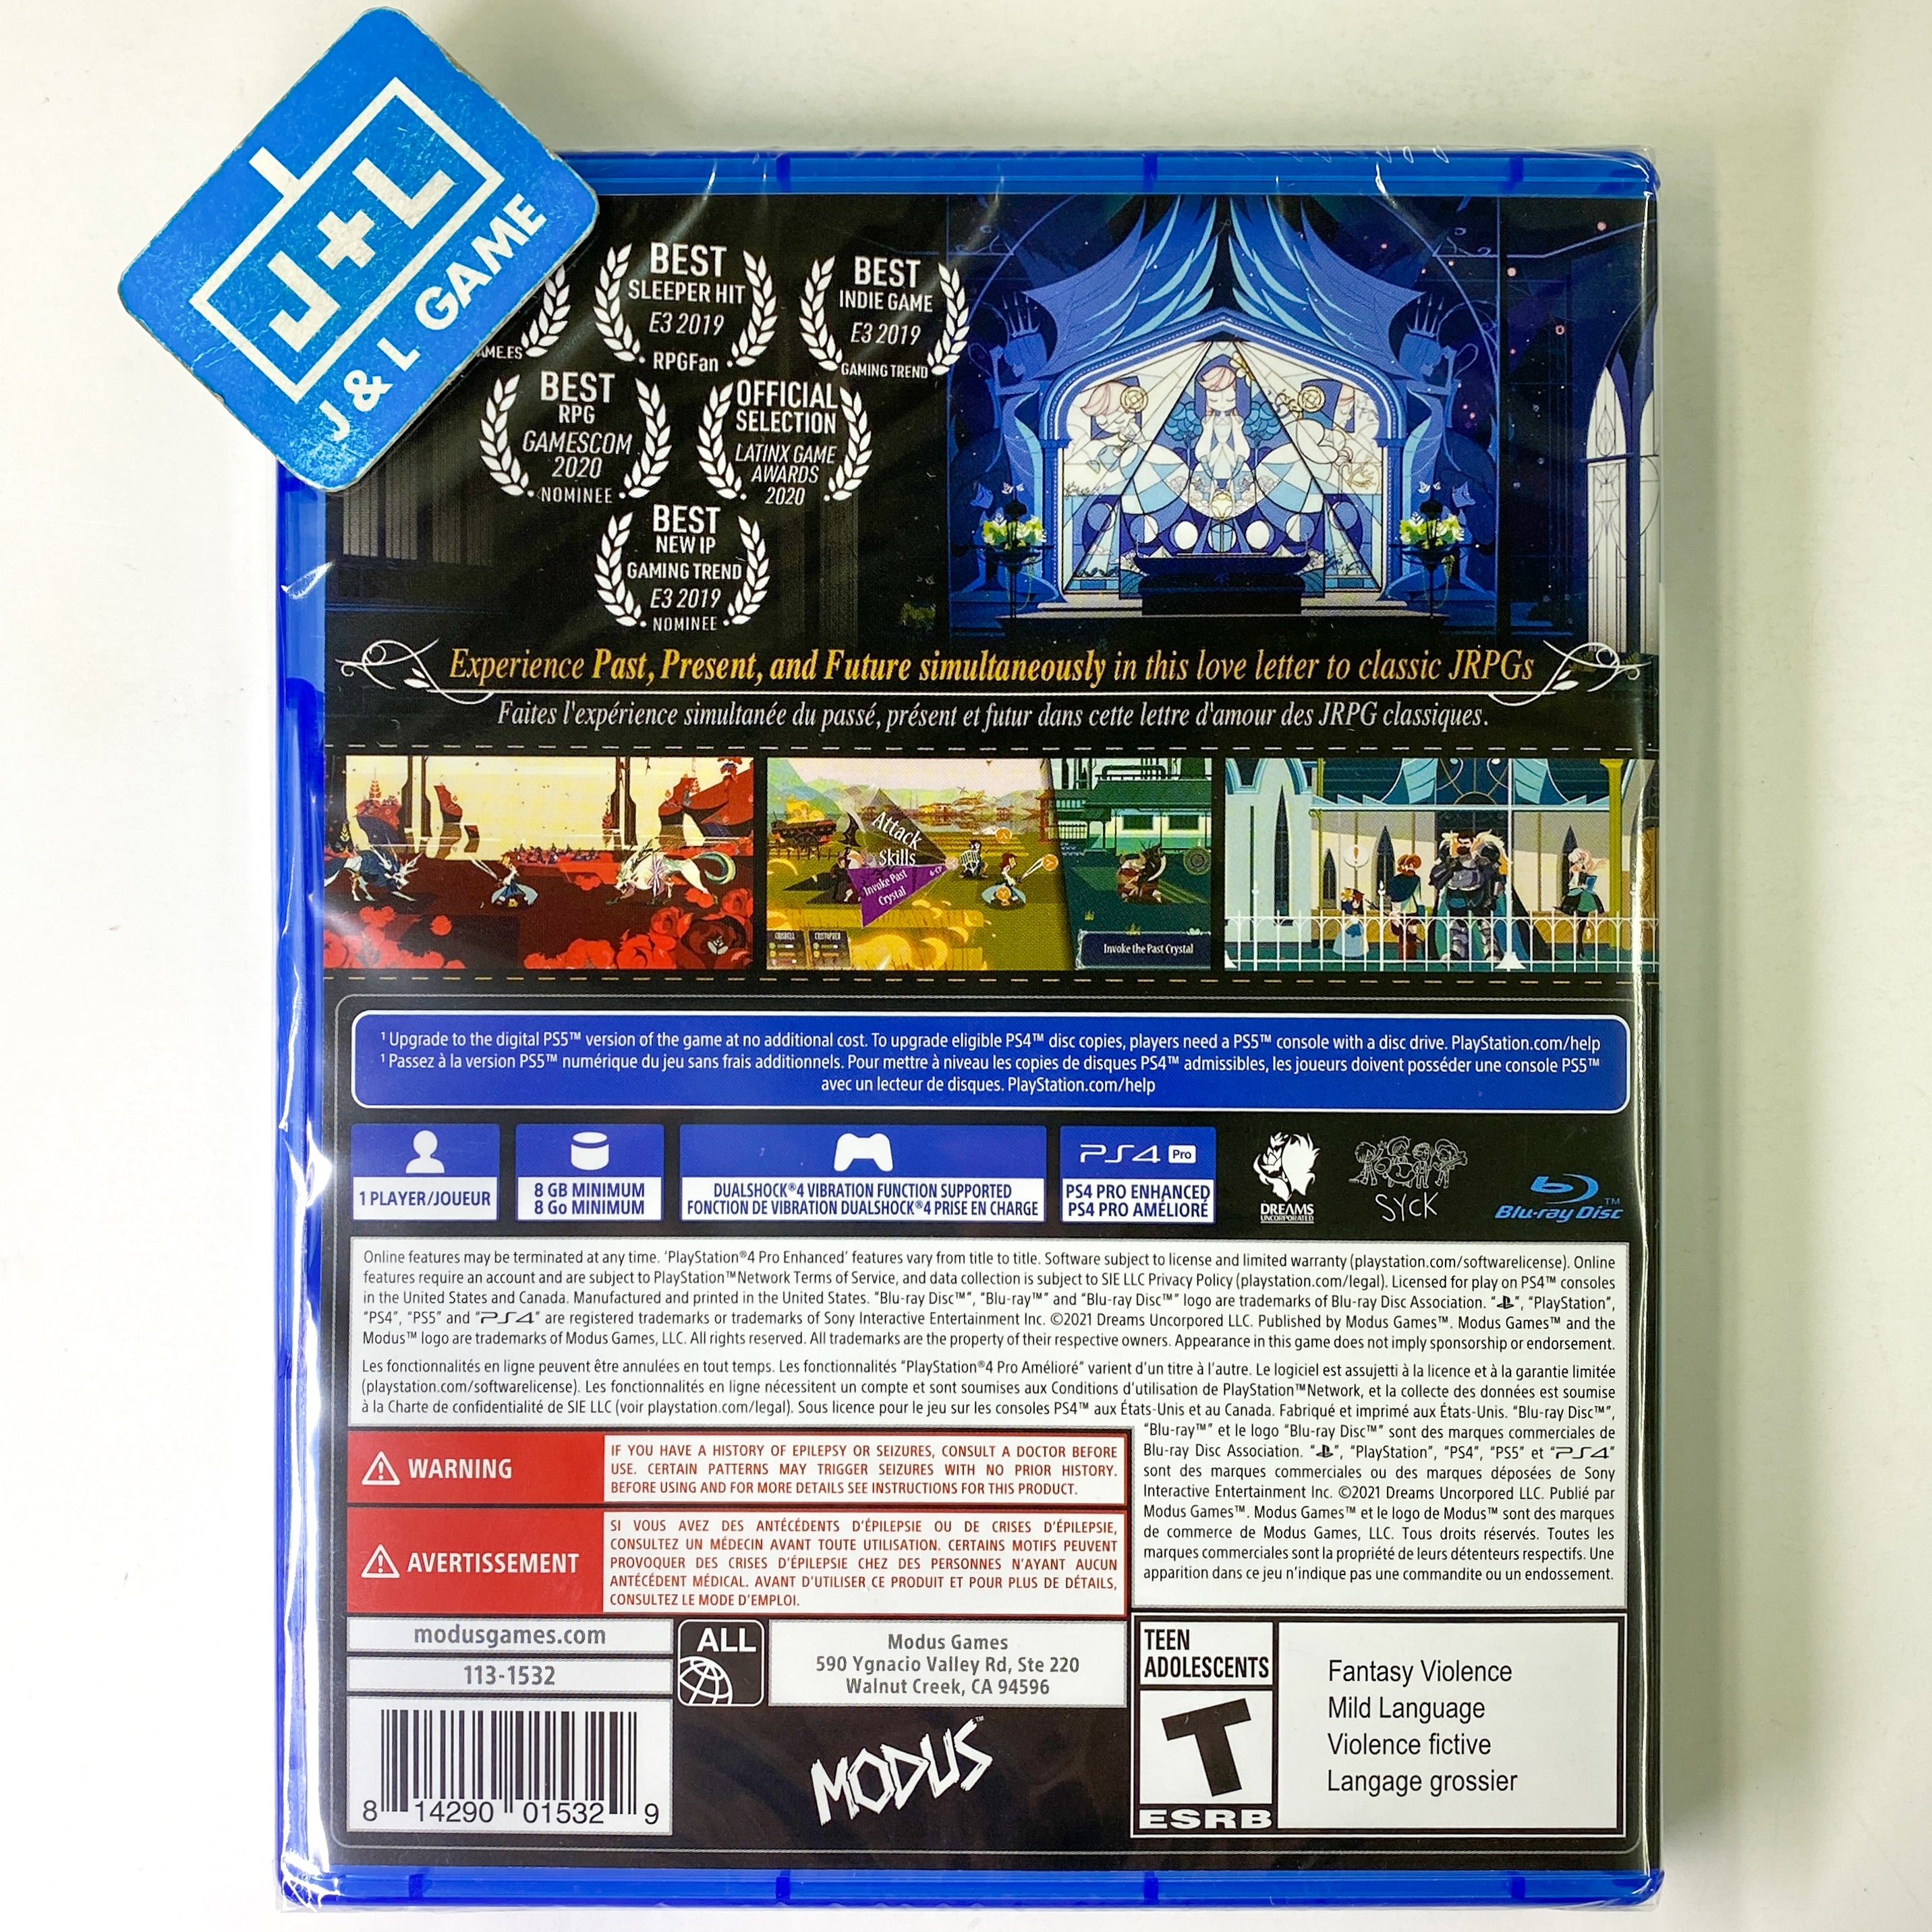 Cris Tales - PlayStation 4 Video Games Modus   